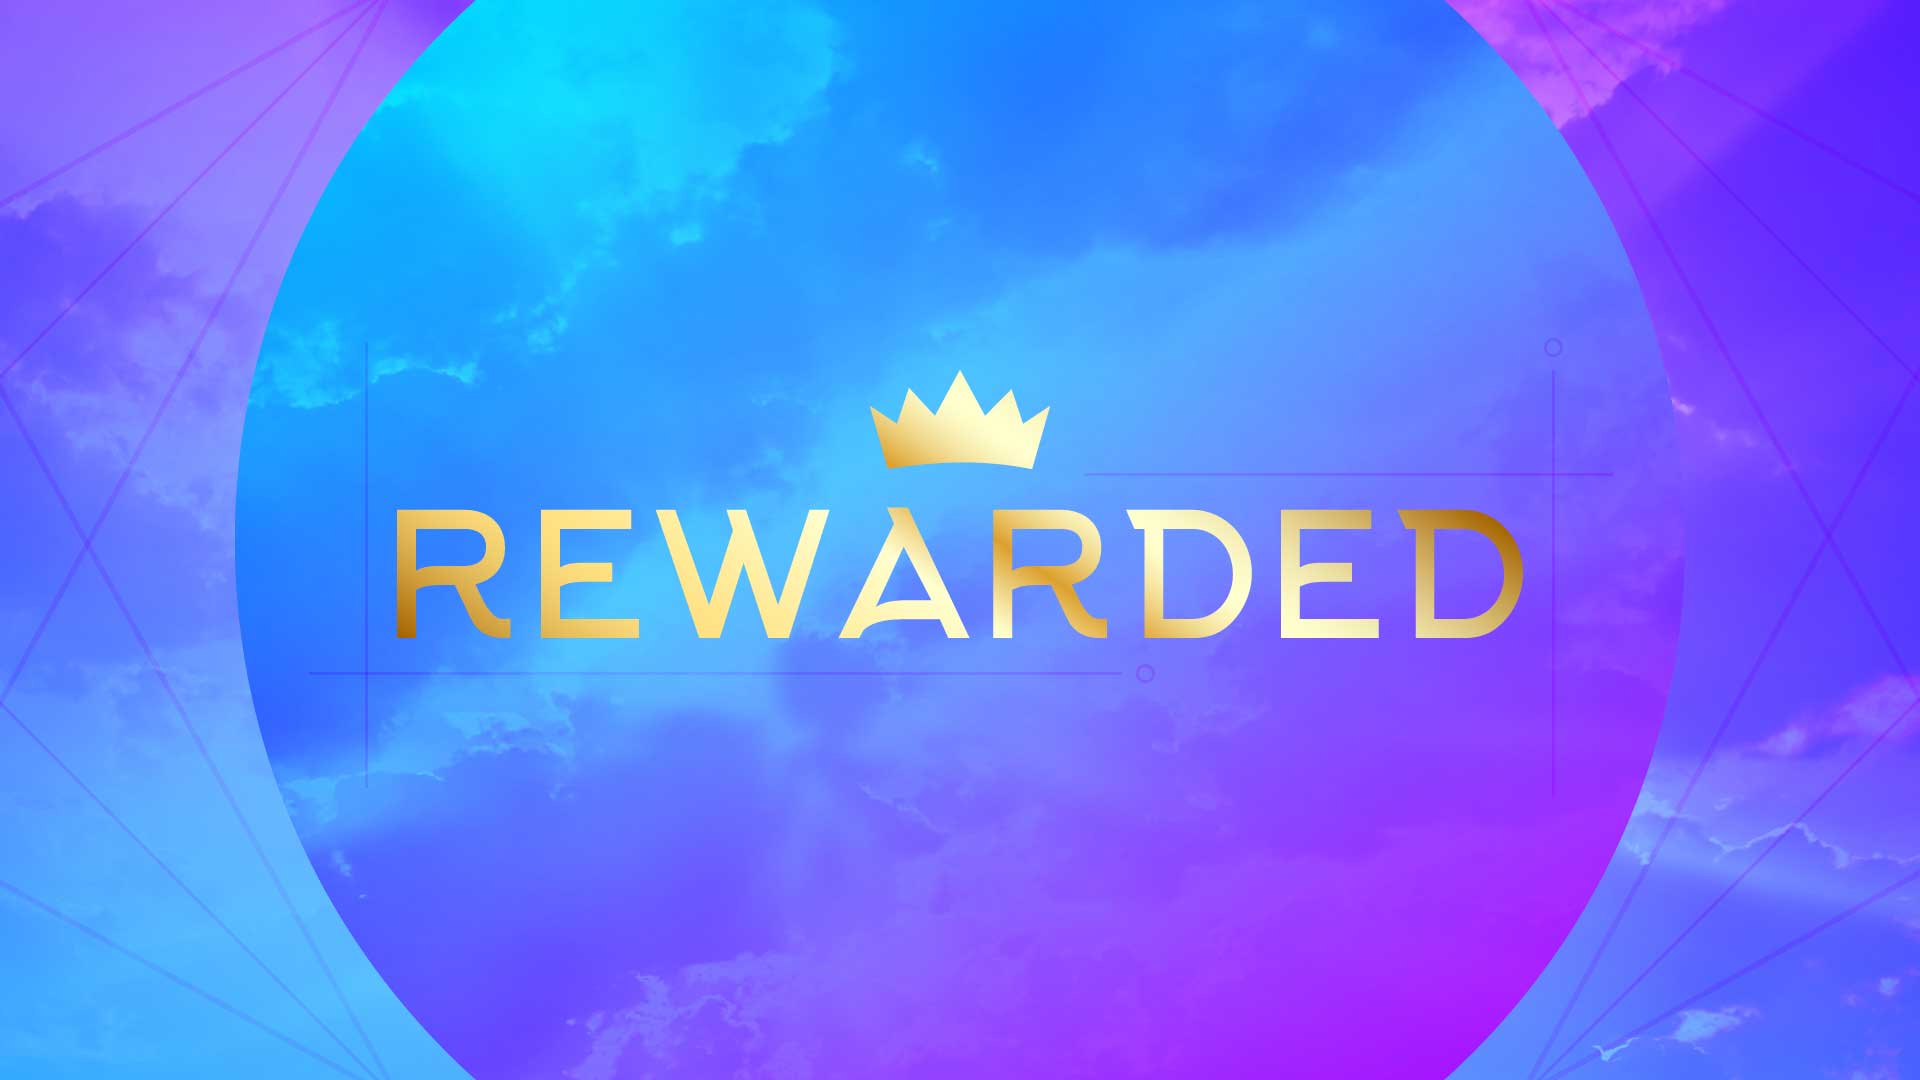 Rewarded